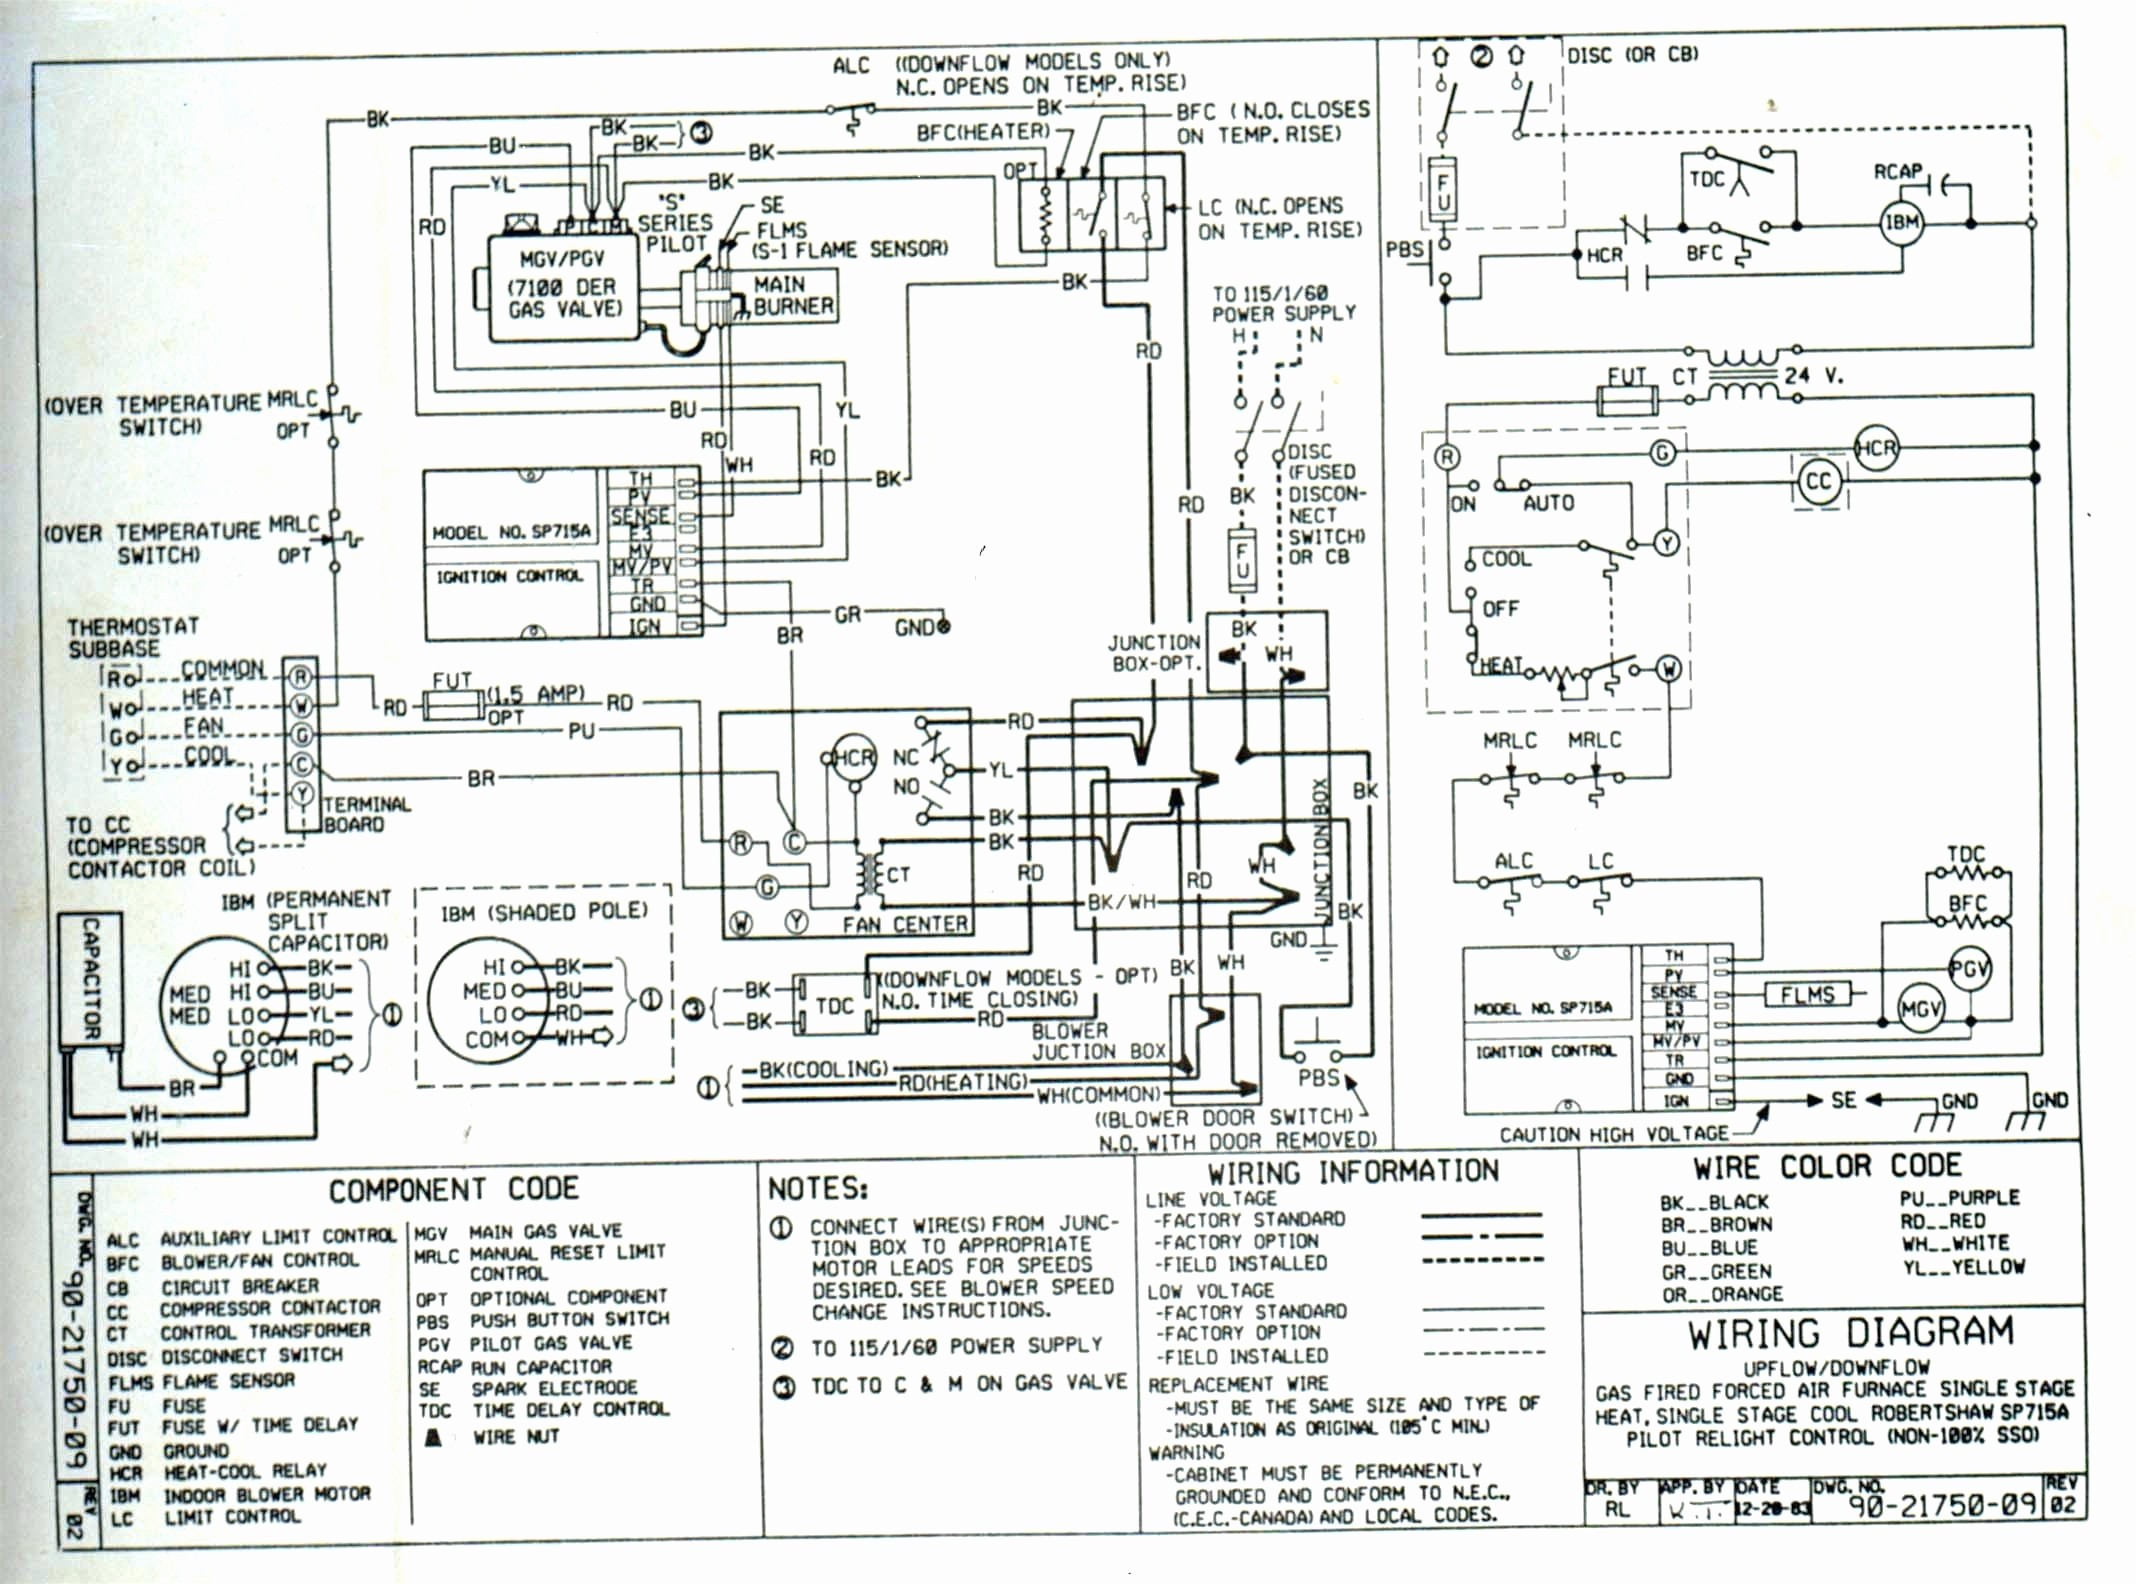 Ac gear motor wiring diagram & Wiring Diagram For Century Electric